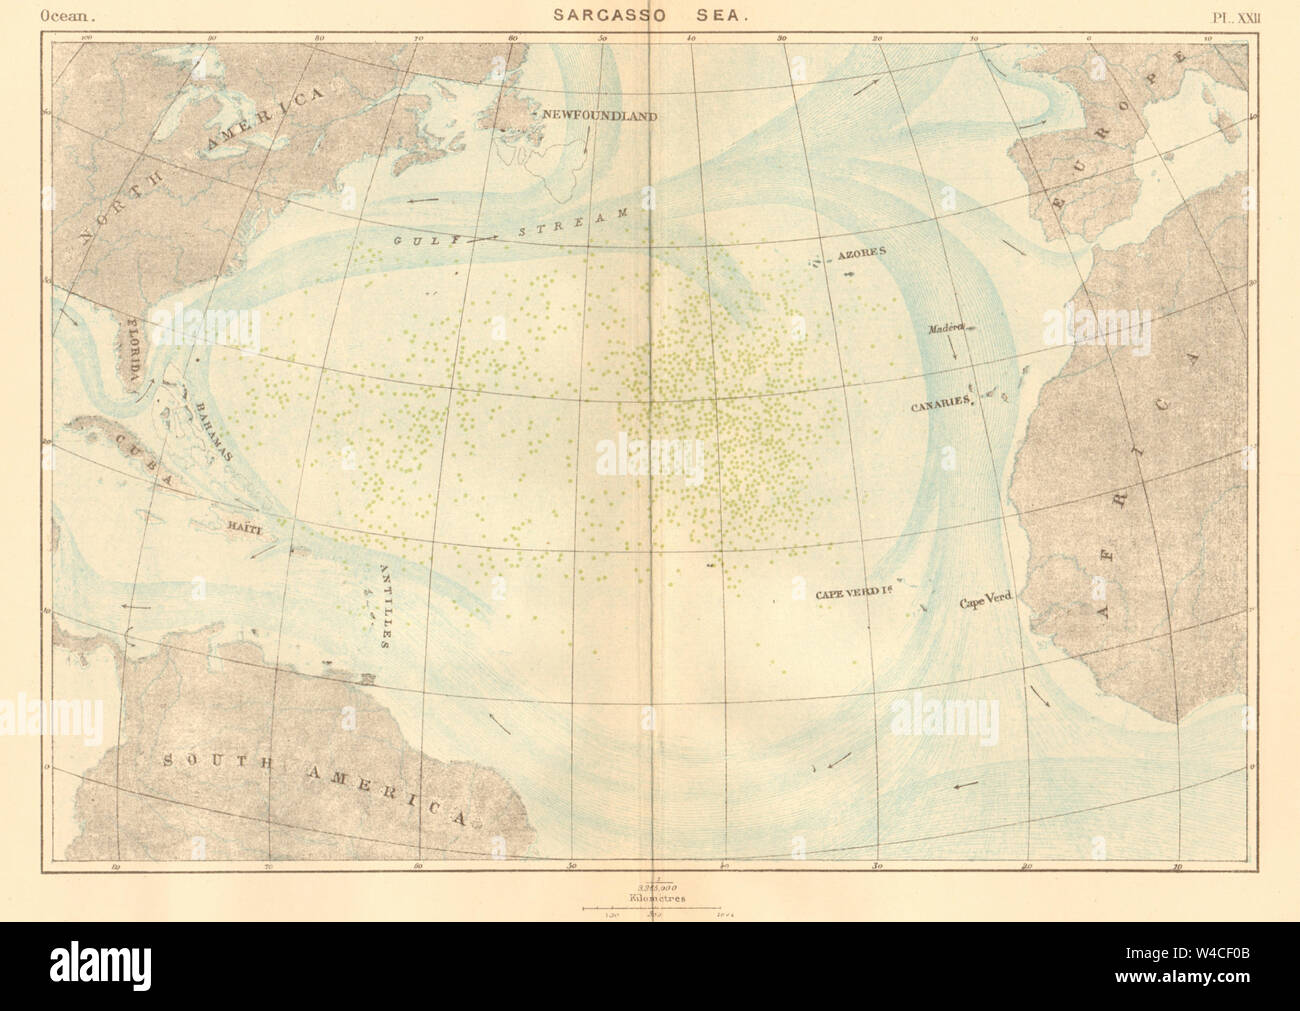 Sargasso Sea. Atlantic Ocean 1886 old antique vintage map plan chart Stock Photo